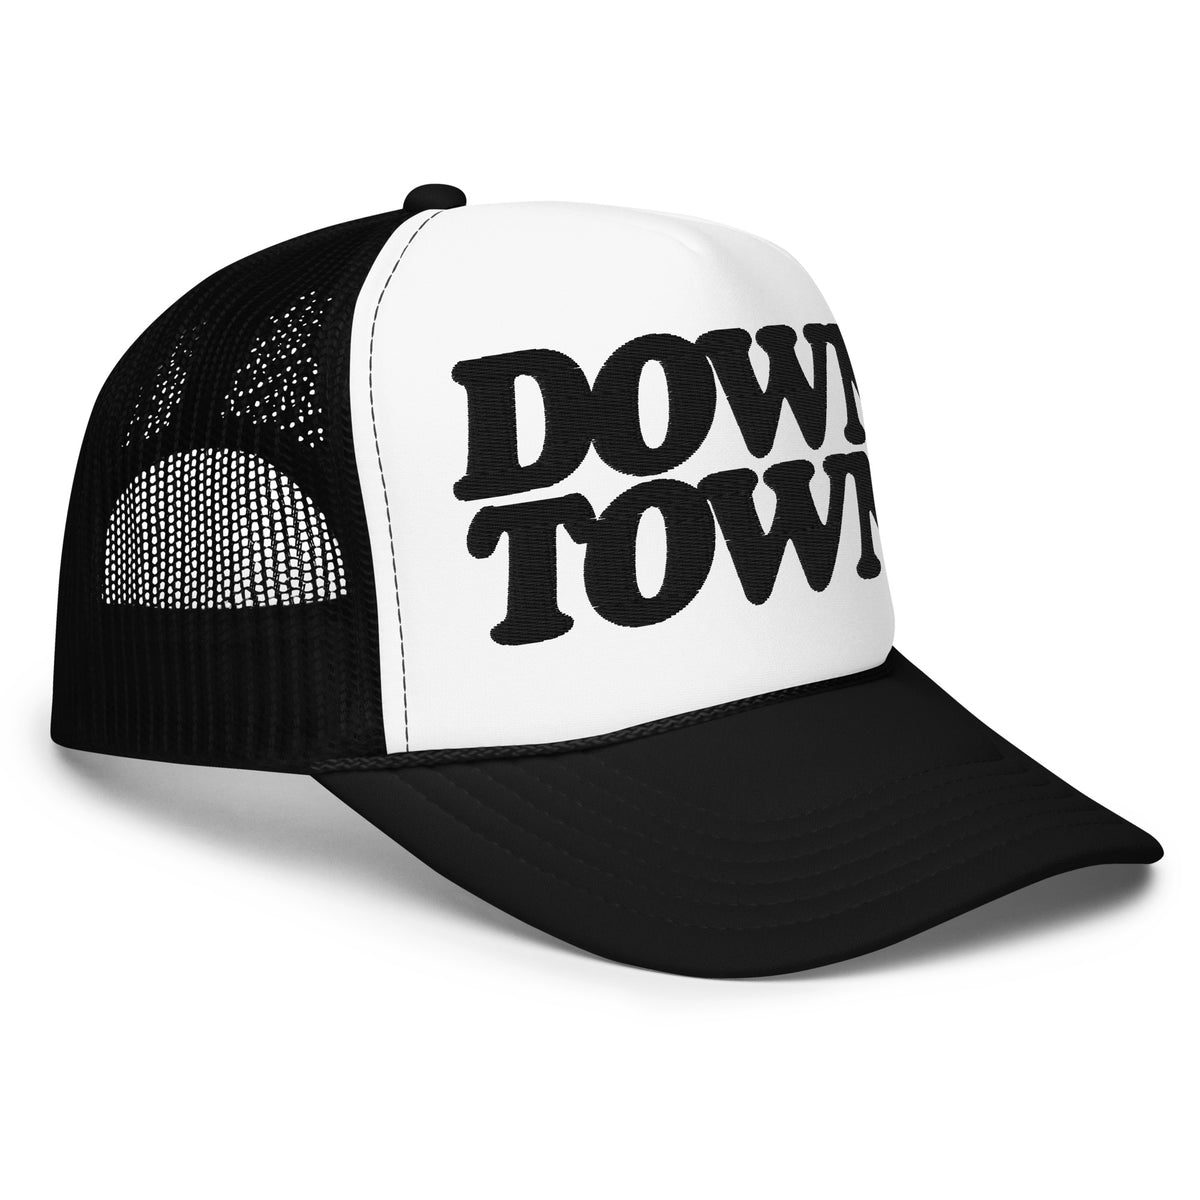 Downtown Foam Trucker Hat - Embroidered - Black / White    